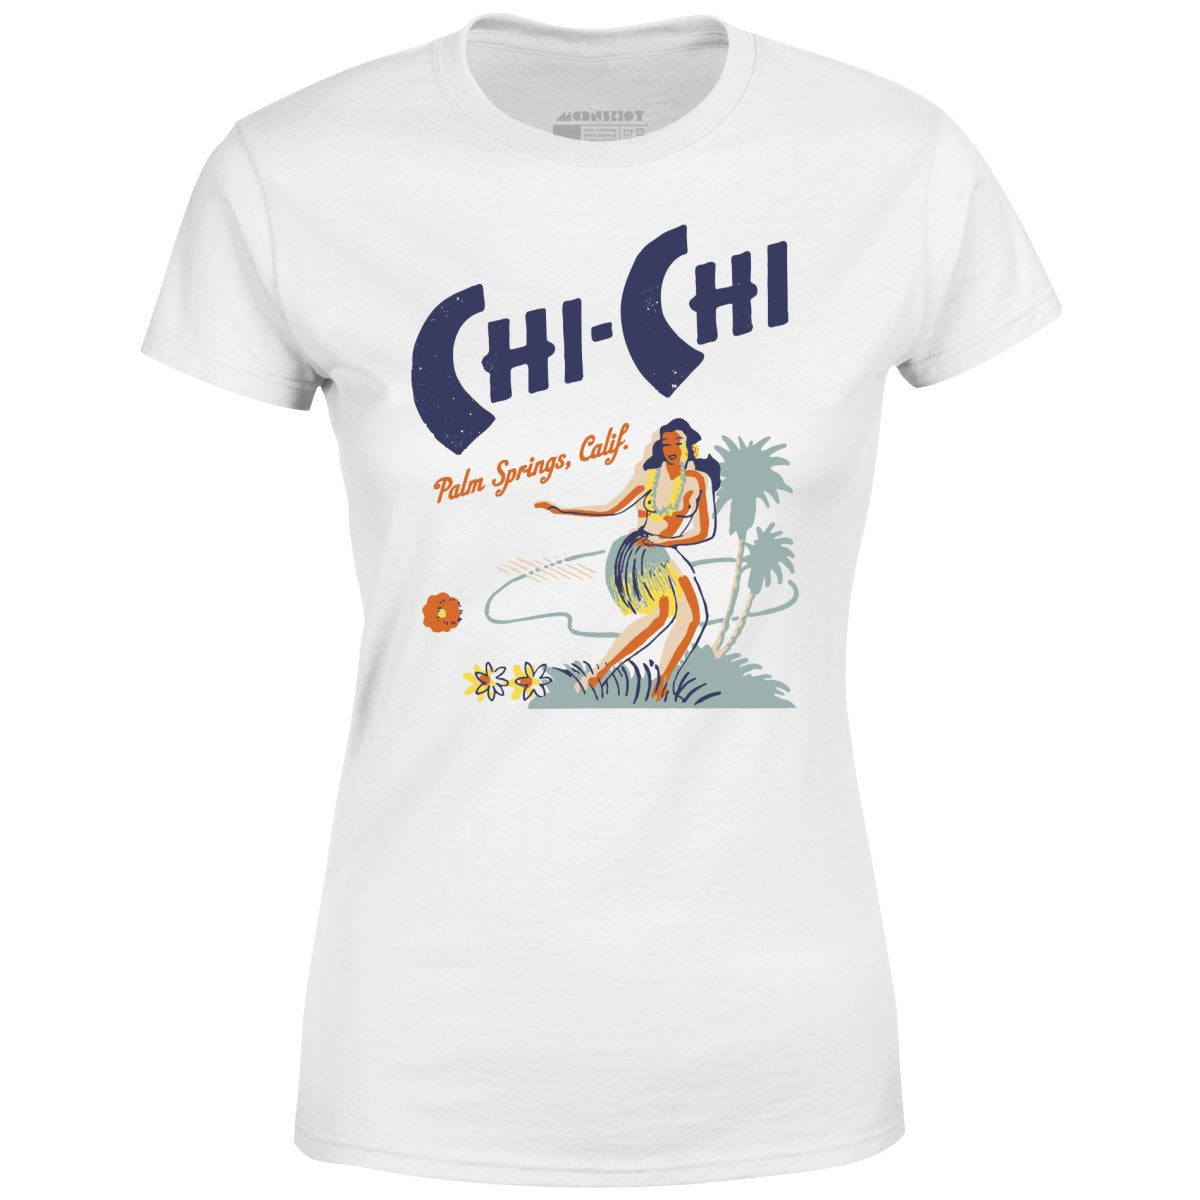 Chi Chi - Palm Springs, CA - Vintage Tiki Bar - Women's T-Shirt